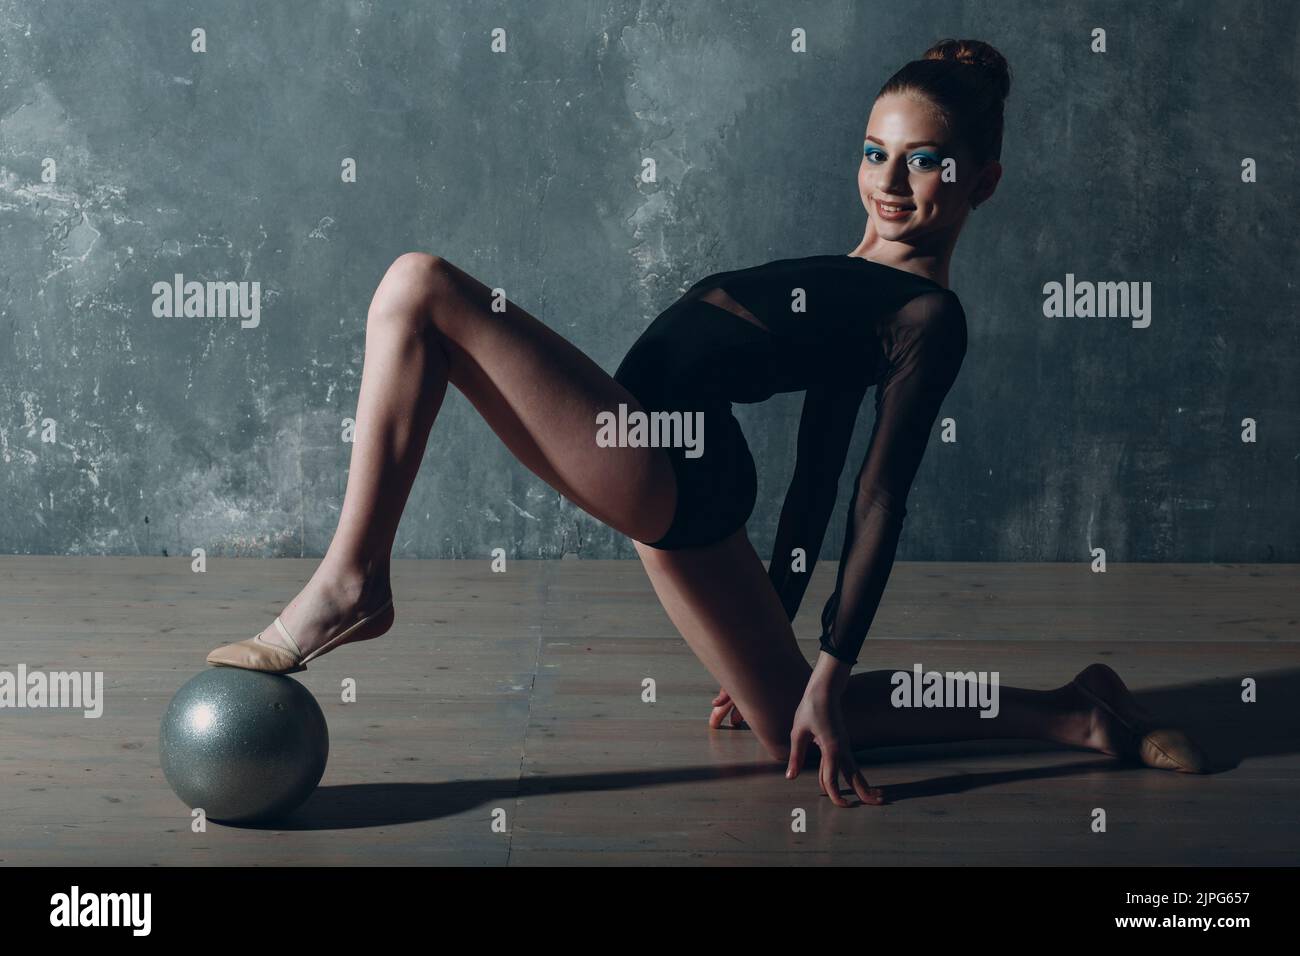 Young girl professional gymnast woman leg close up rhythmic gymnastics with ball at studio. Stock Photo